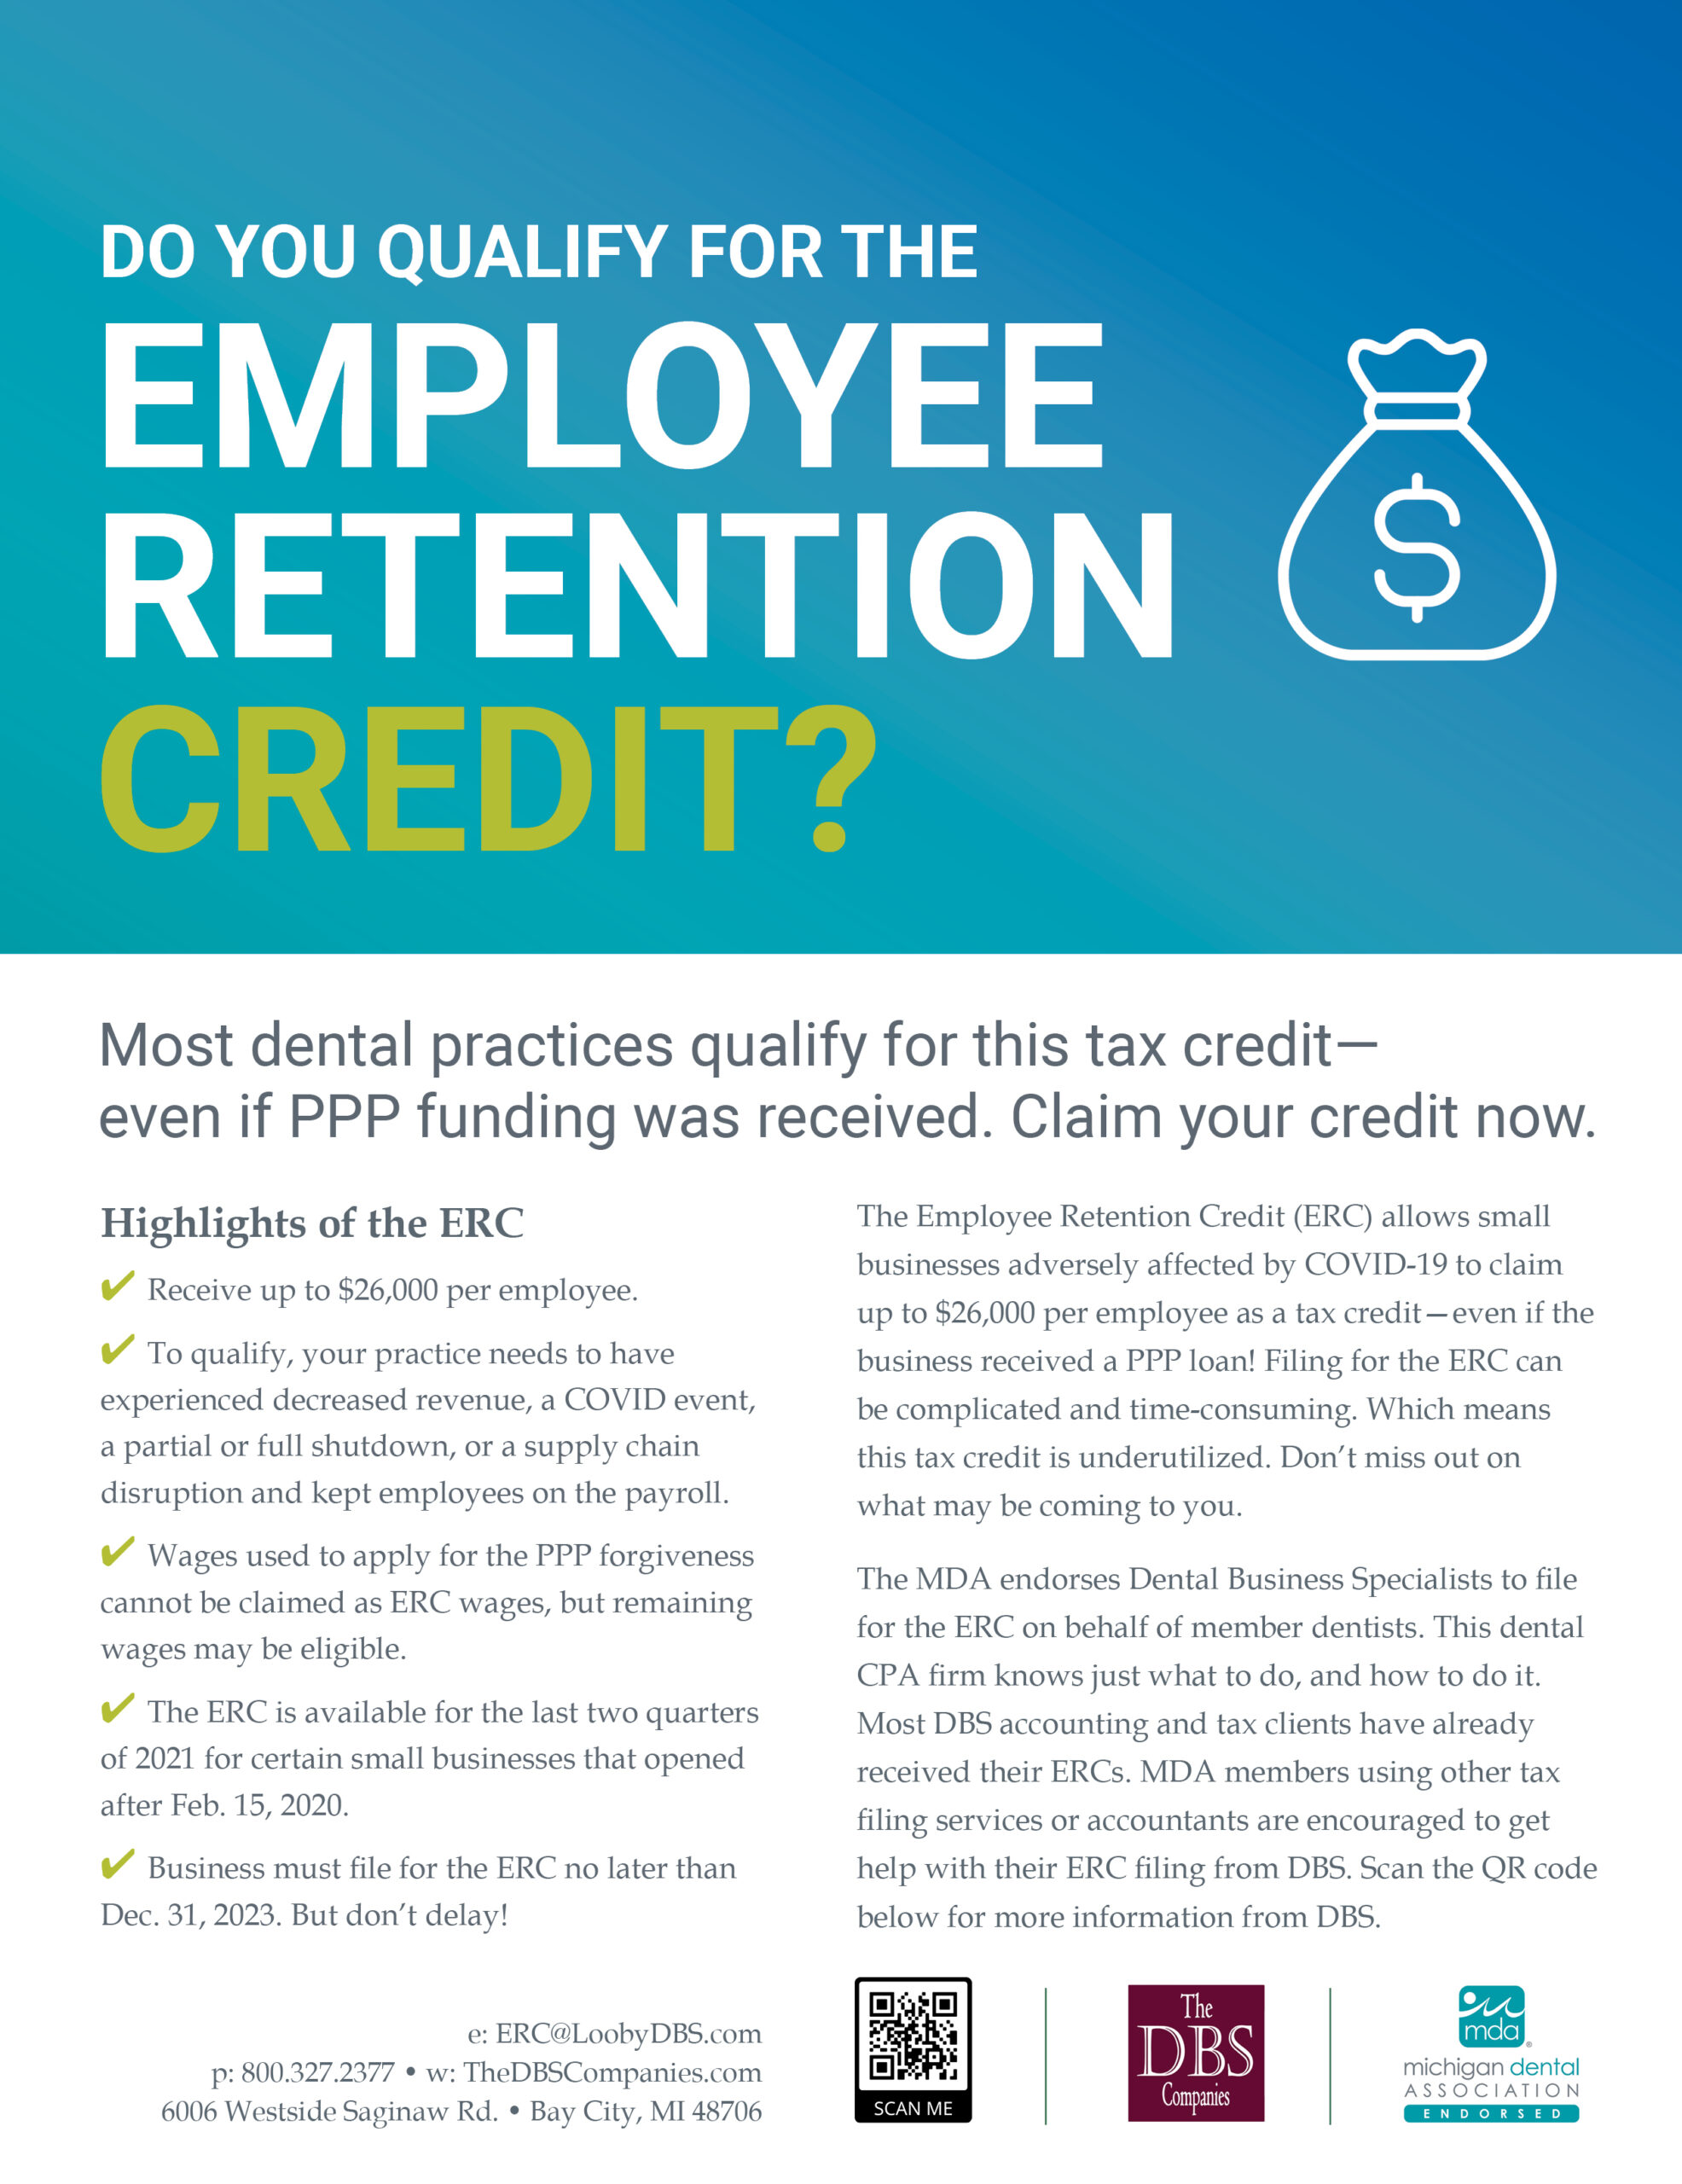 erc-employee-retention-tax-credit-inquiry-mda-programs